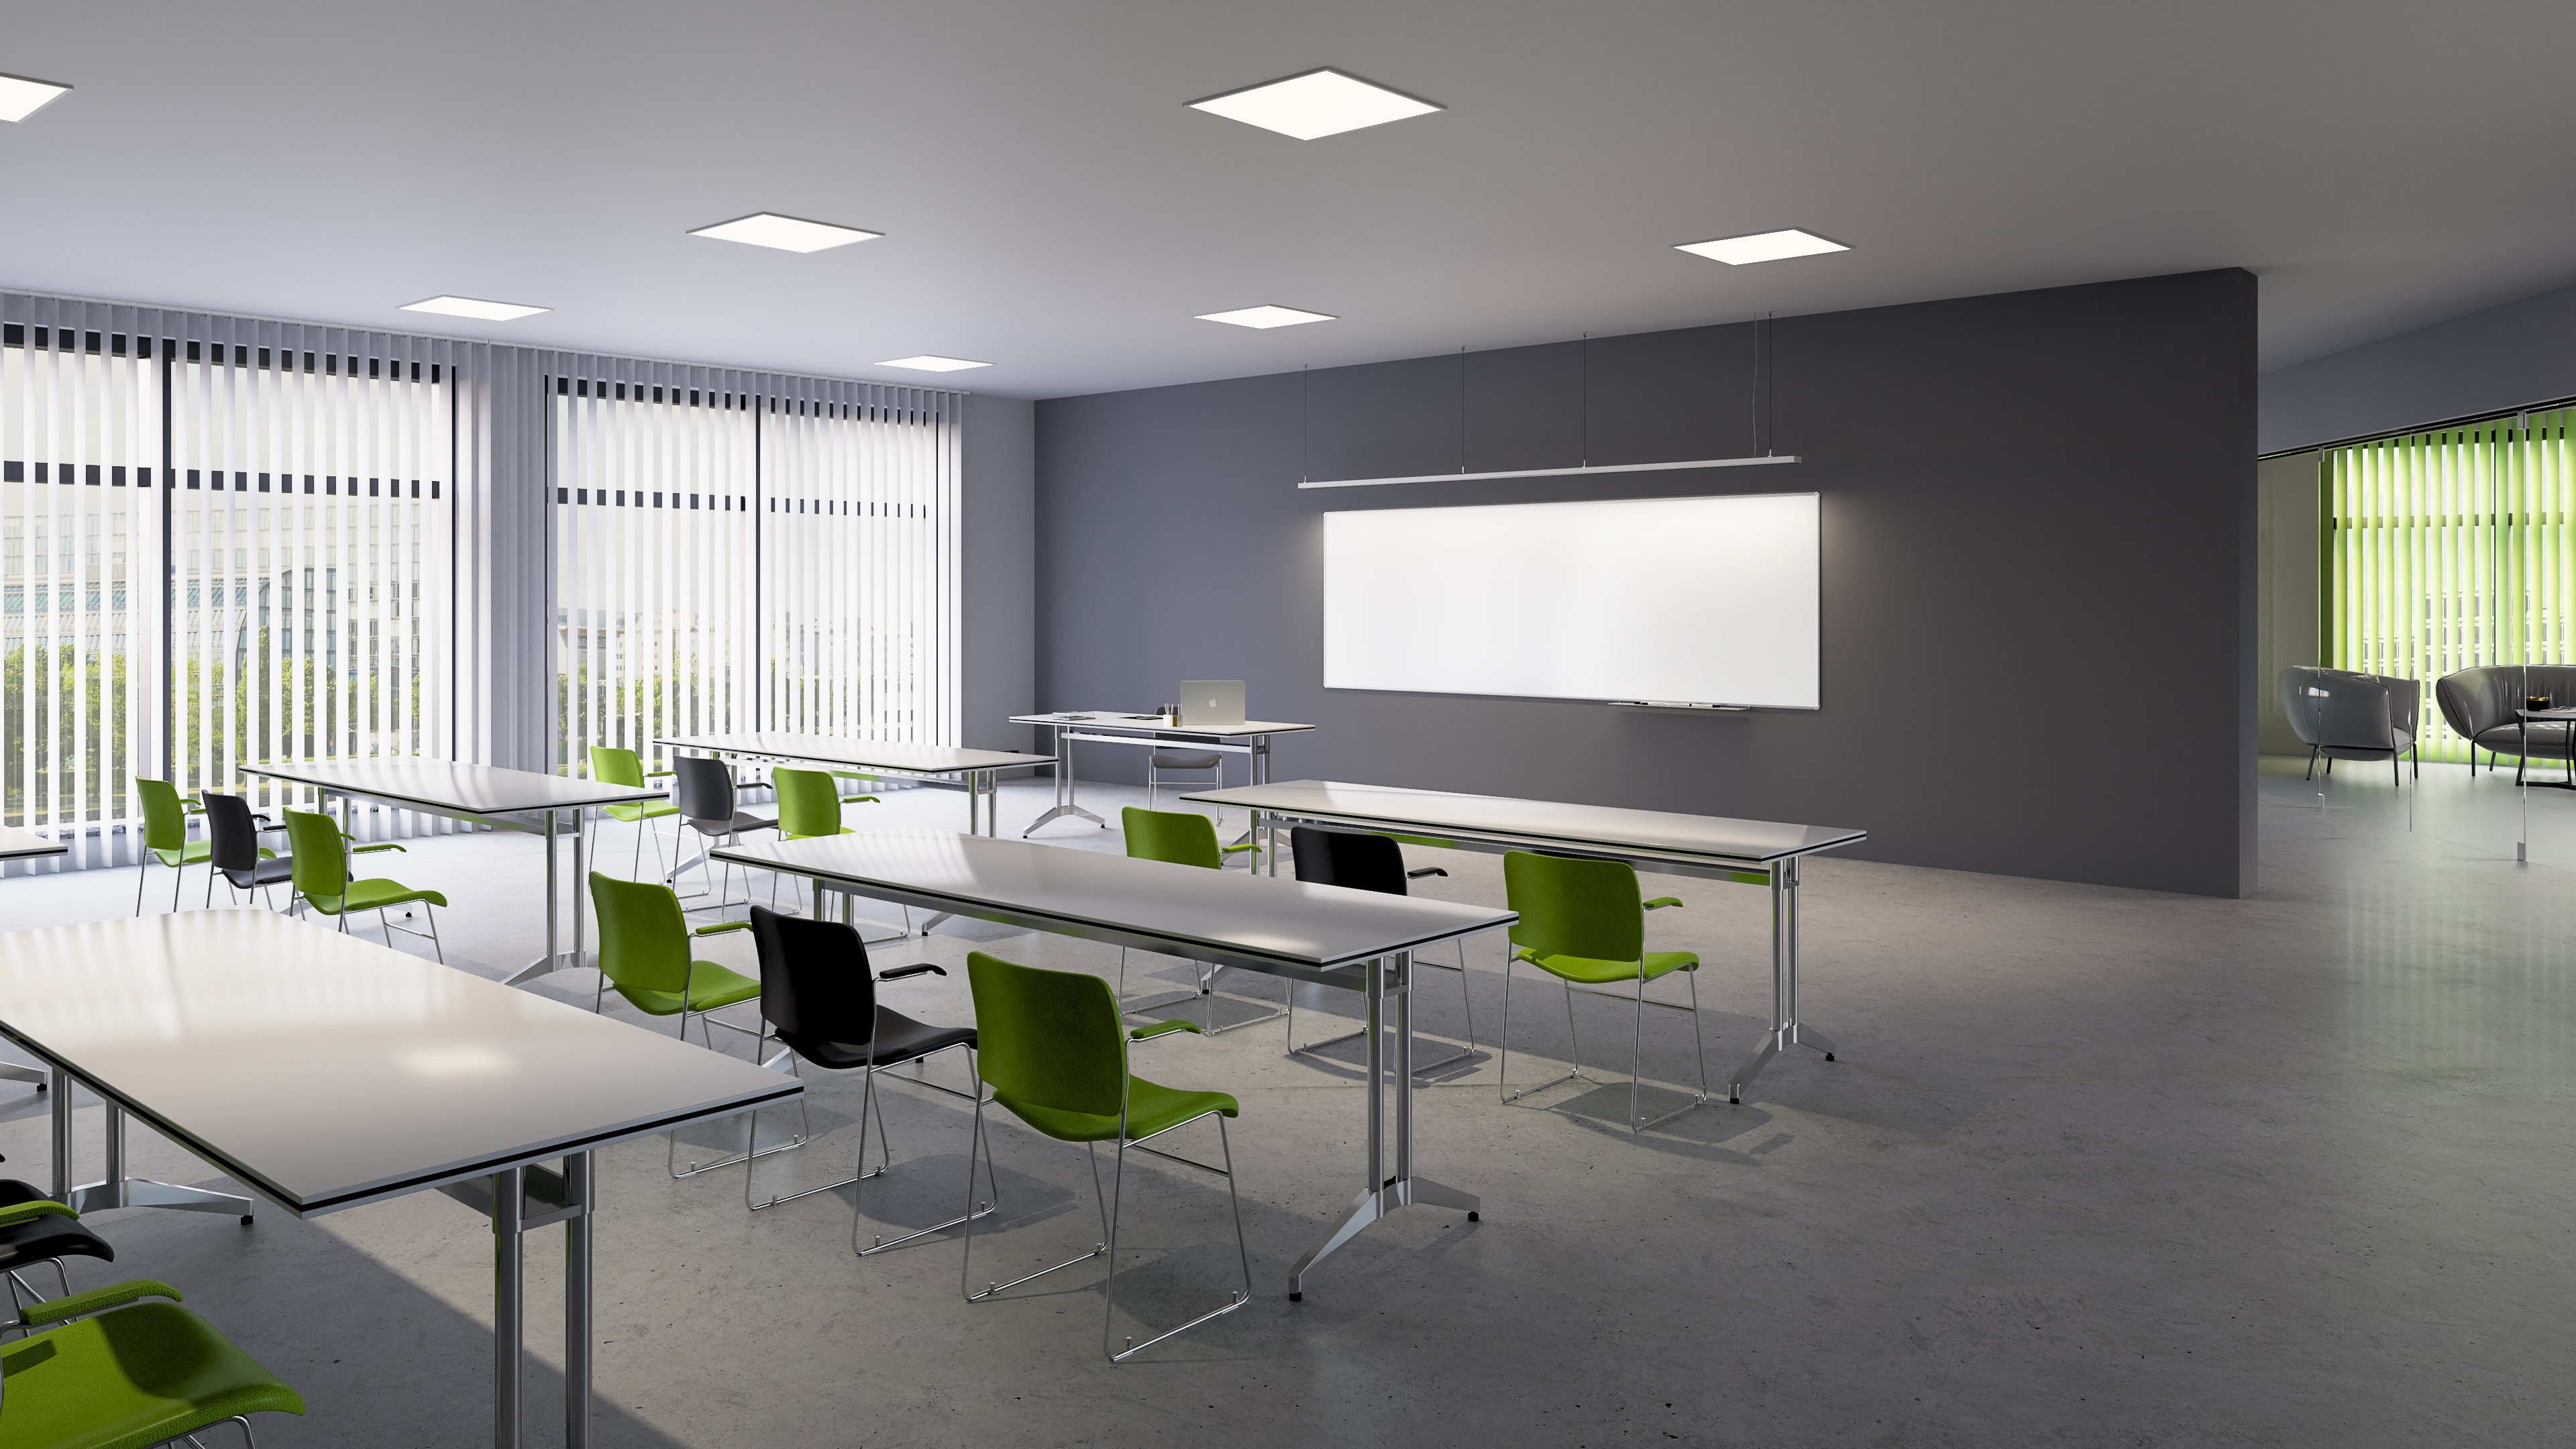 Classroom with C21 whiteboard LED luminaire